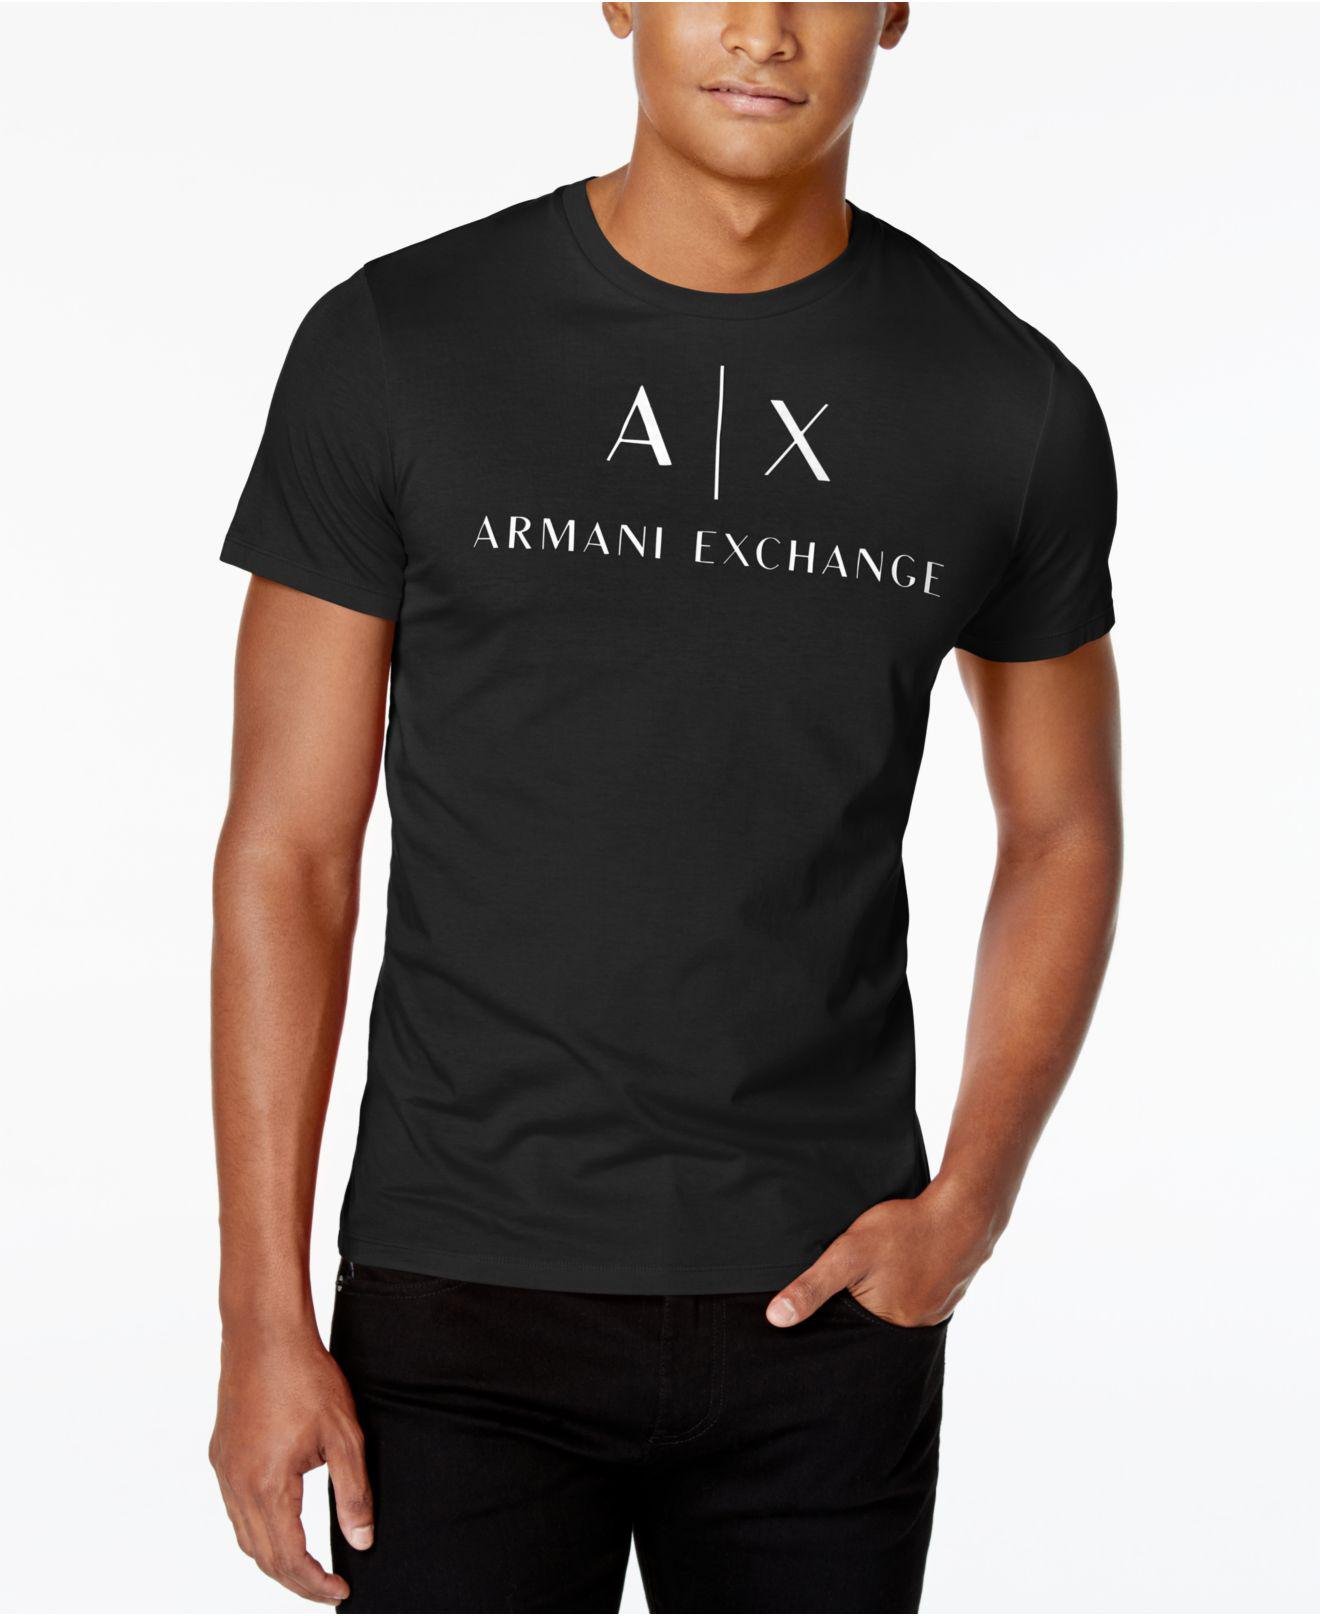 armani exchange t shirts price in india,connectintl.com